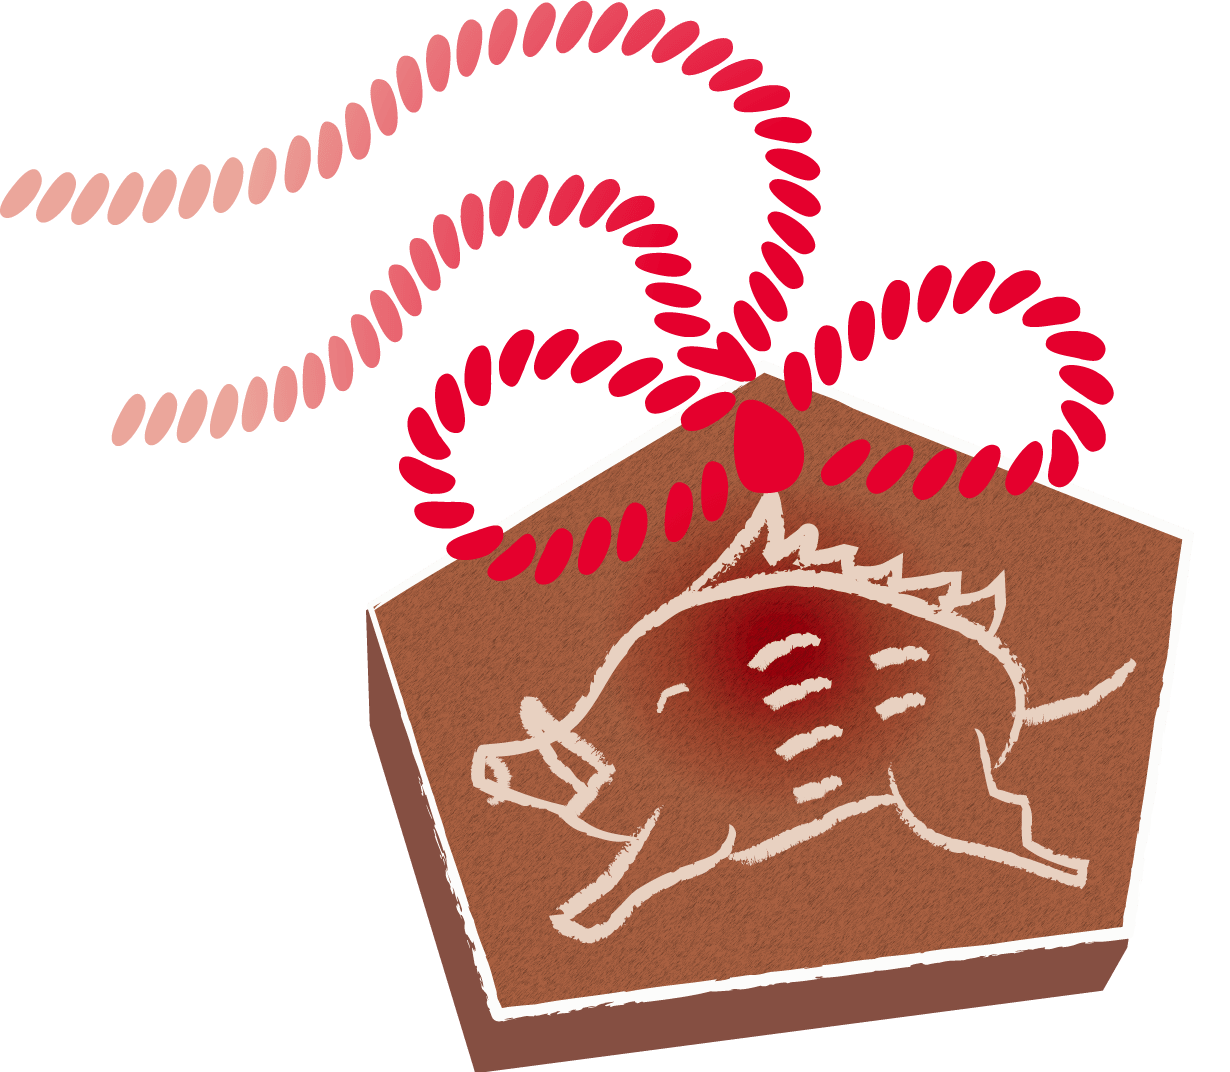 Cute wood grain votive tablet Wild boar-2019 Zodiac (Year of the Pig)